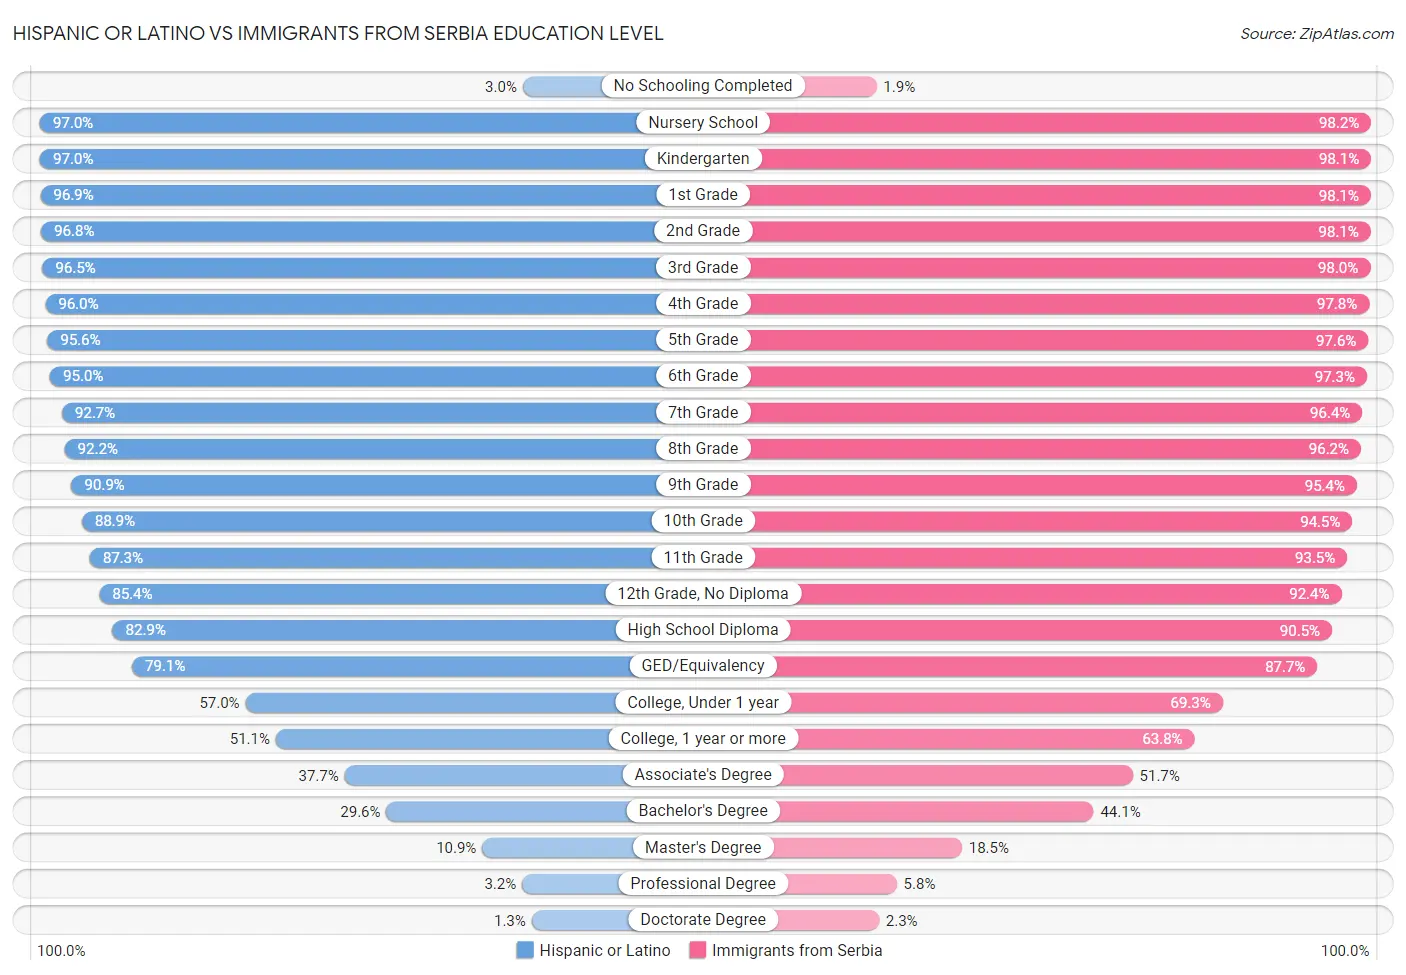 Hispanic or Latino vs Immigrants from Serbia Education Level